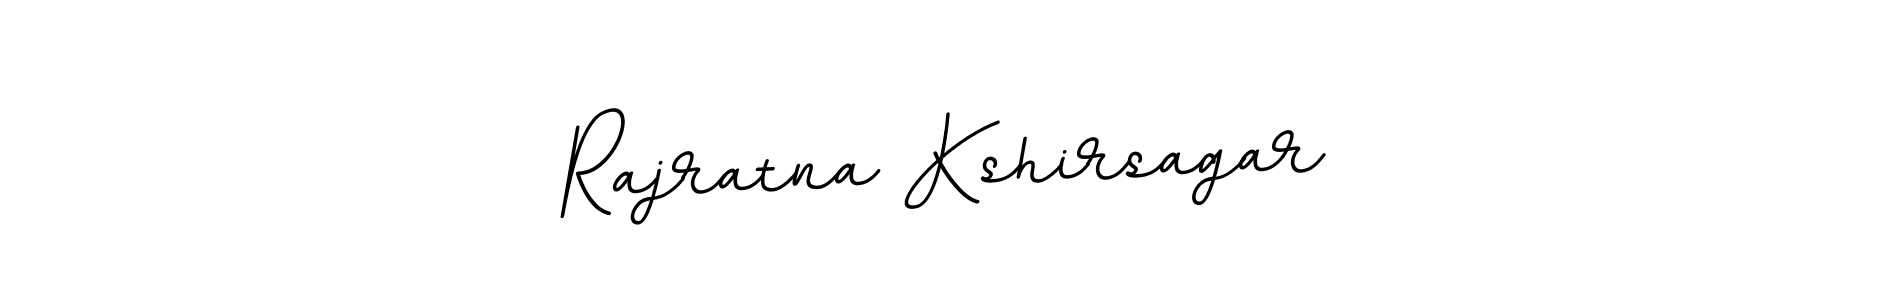 How to Draw Rajratna Kshirsagar signature style? BallpointsItalic-DORy9 is a latest design signature styles for name Rajratna Kshirsagar. Rajratna Kshirsagar signature style 11 images and pictures png